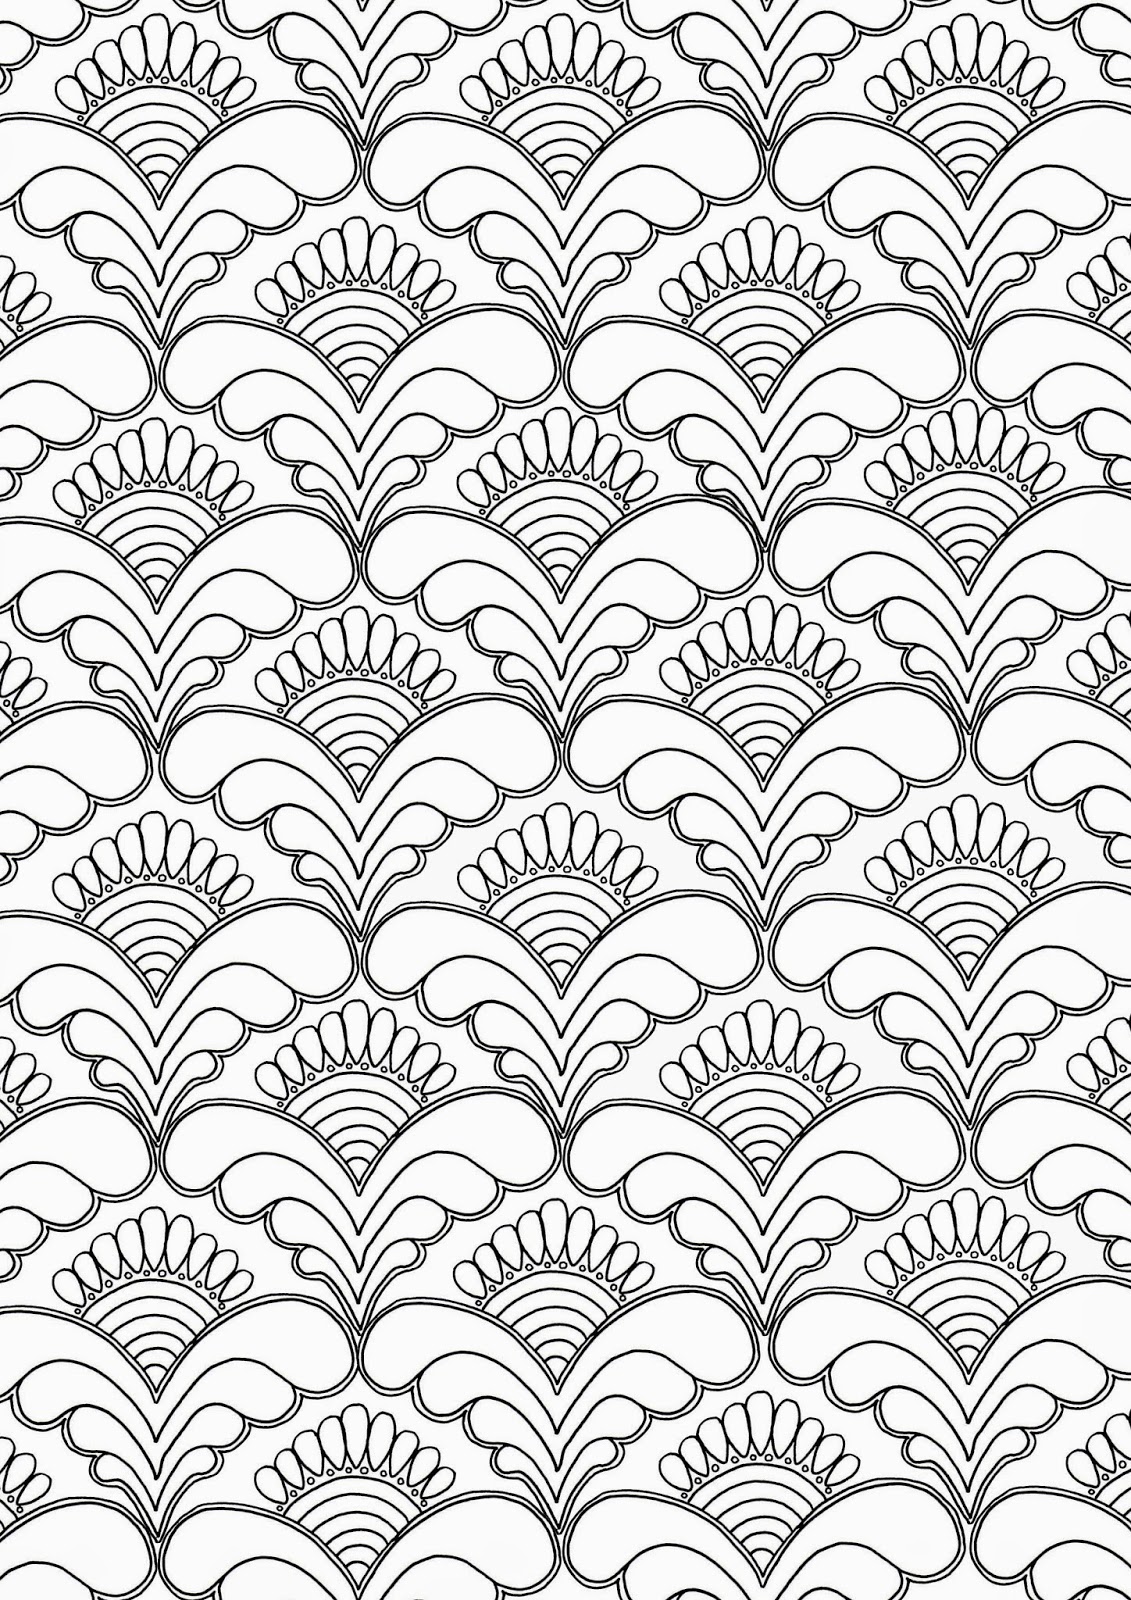 1960s Patterns Wallpaper Book Designs